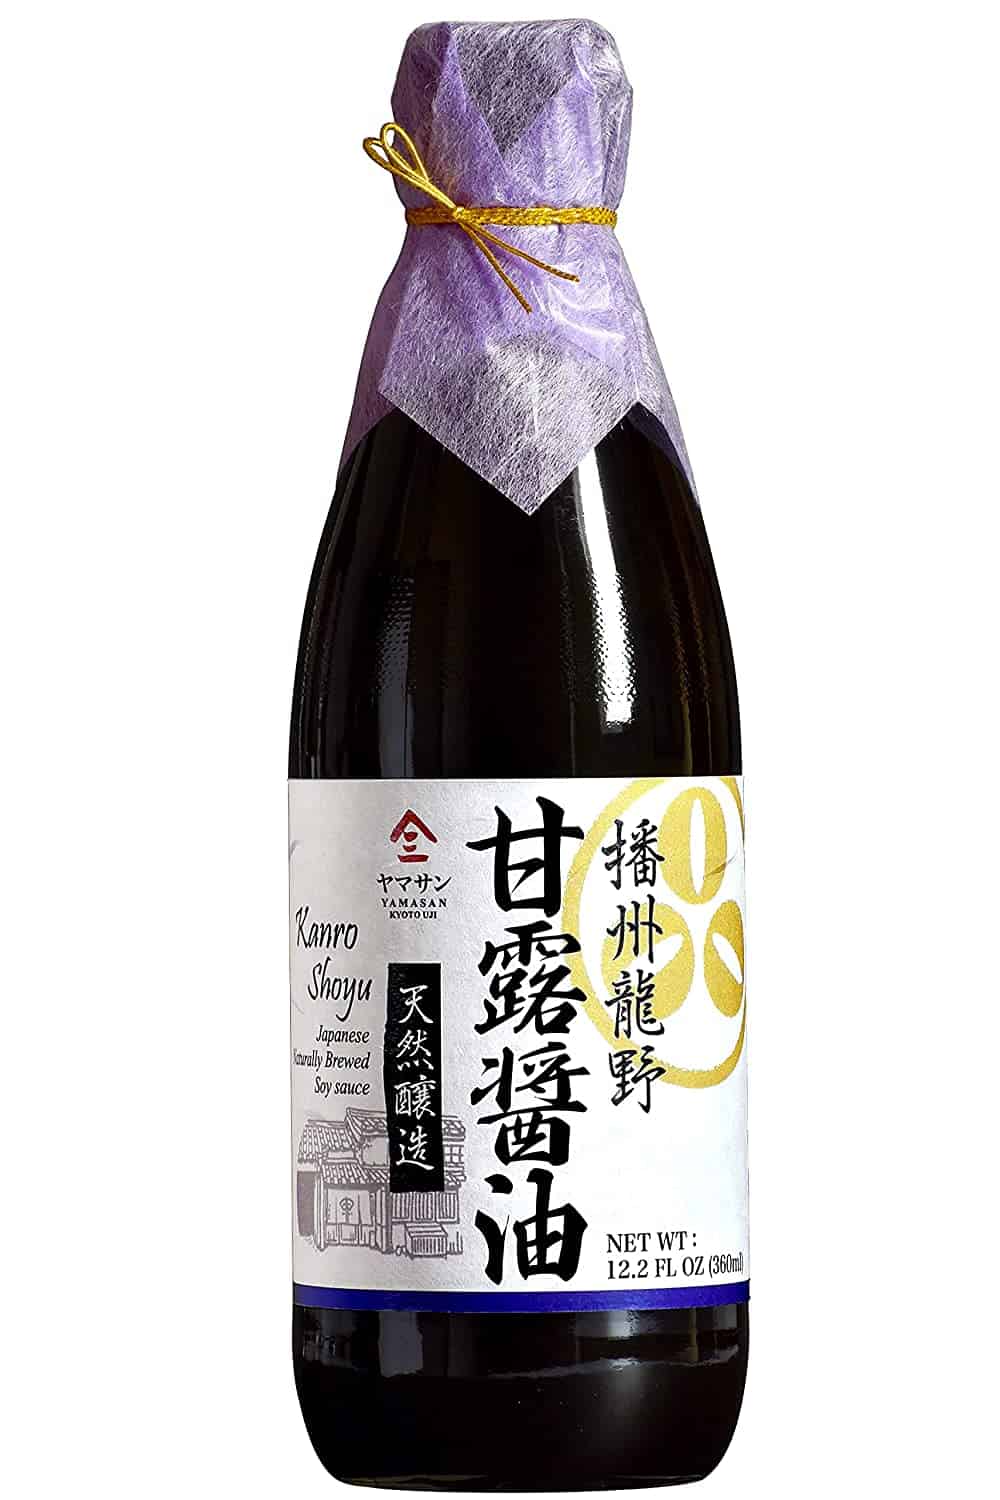 Best double-brewed soy sauce (saishikomi shoyu)- Yamasan Double Brewed Vintage